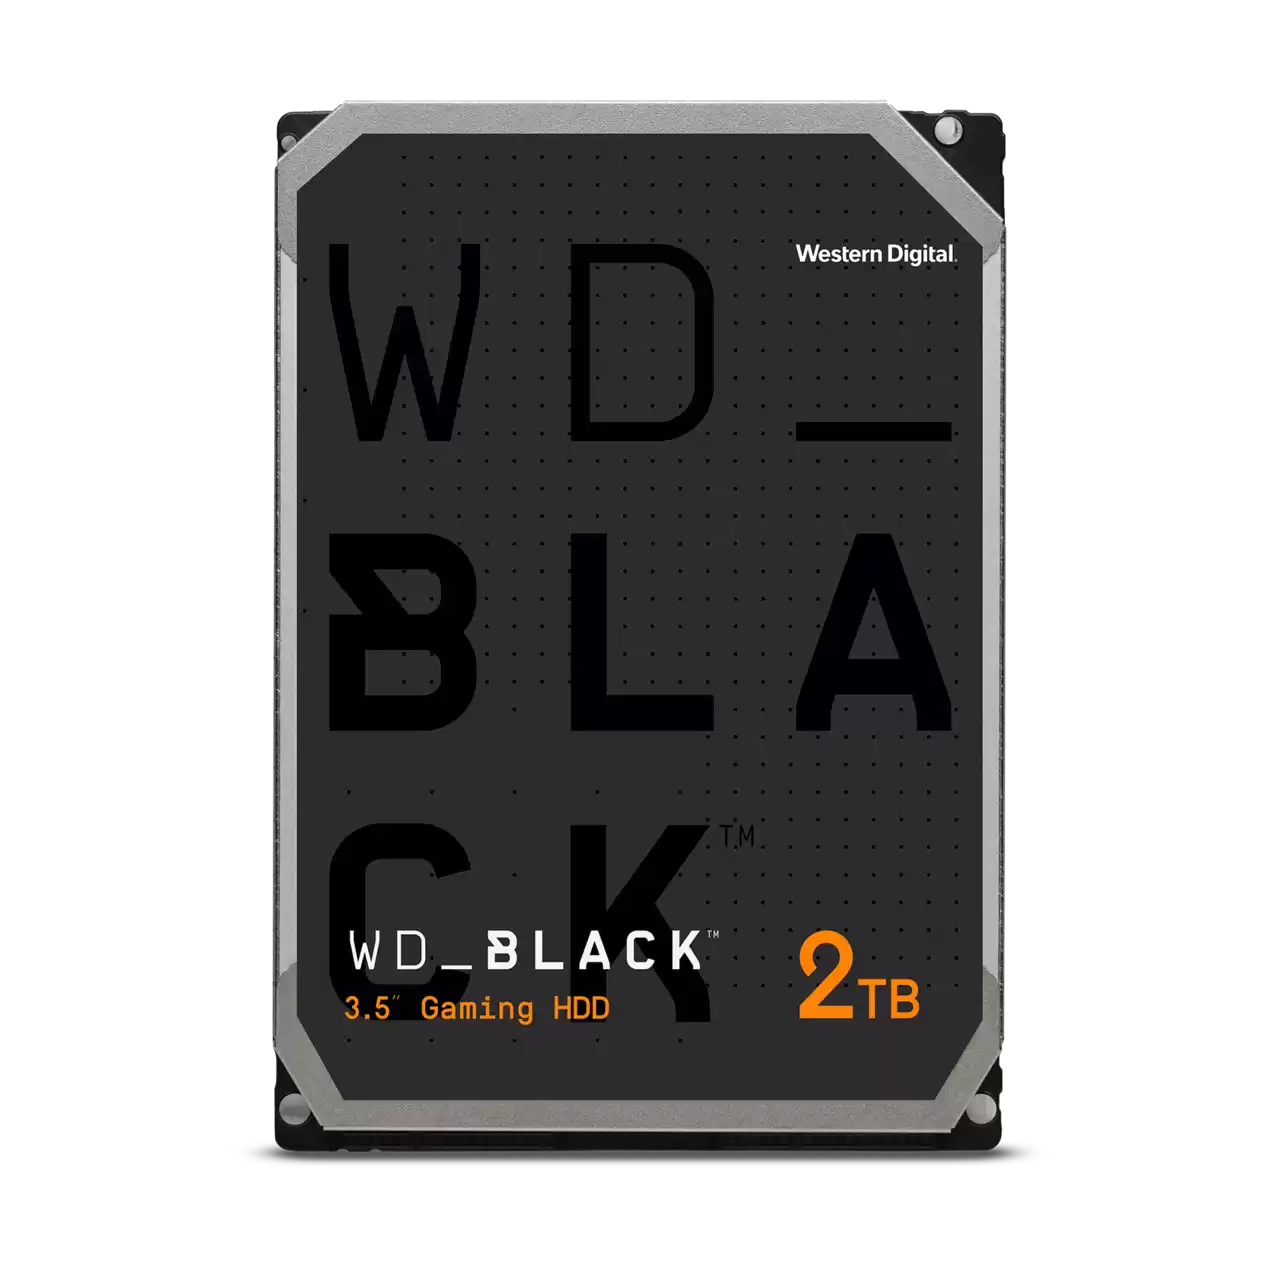 WD Black™ Performance 2TB Desktop Internal HDD